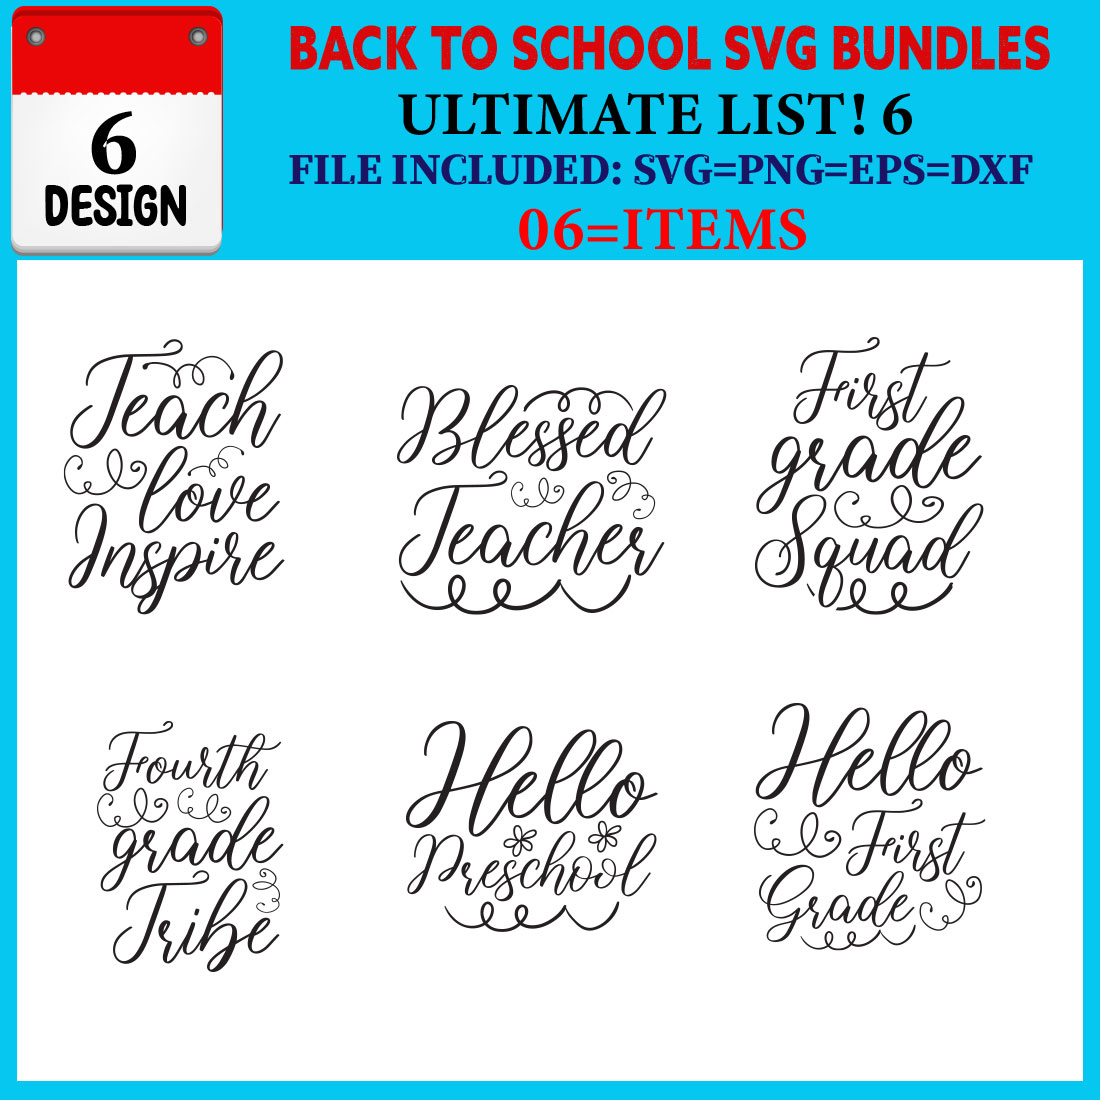 Back To School T-shirt Design Bundle Vol-12 cover image.